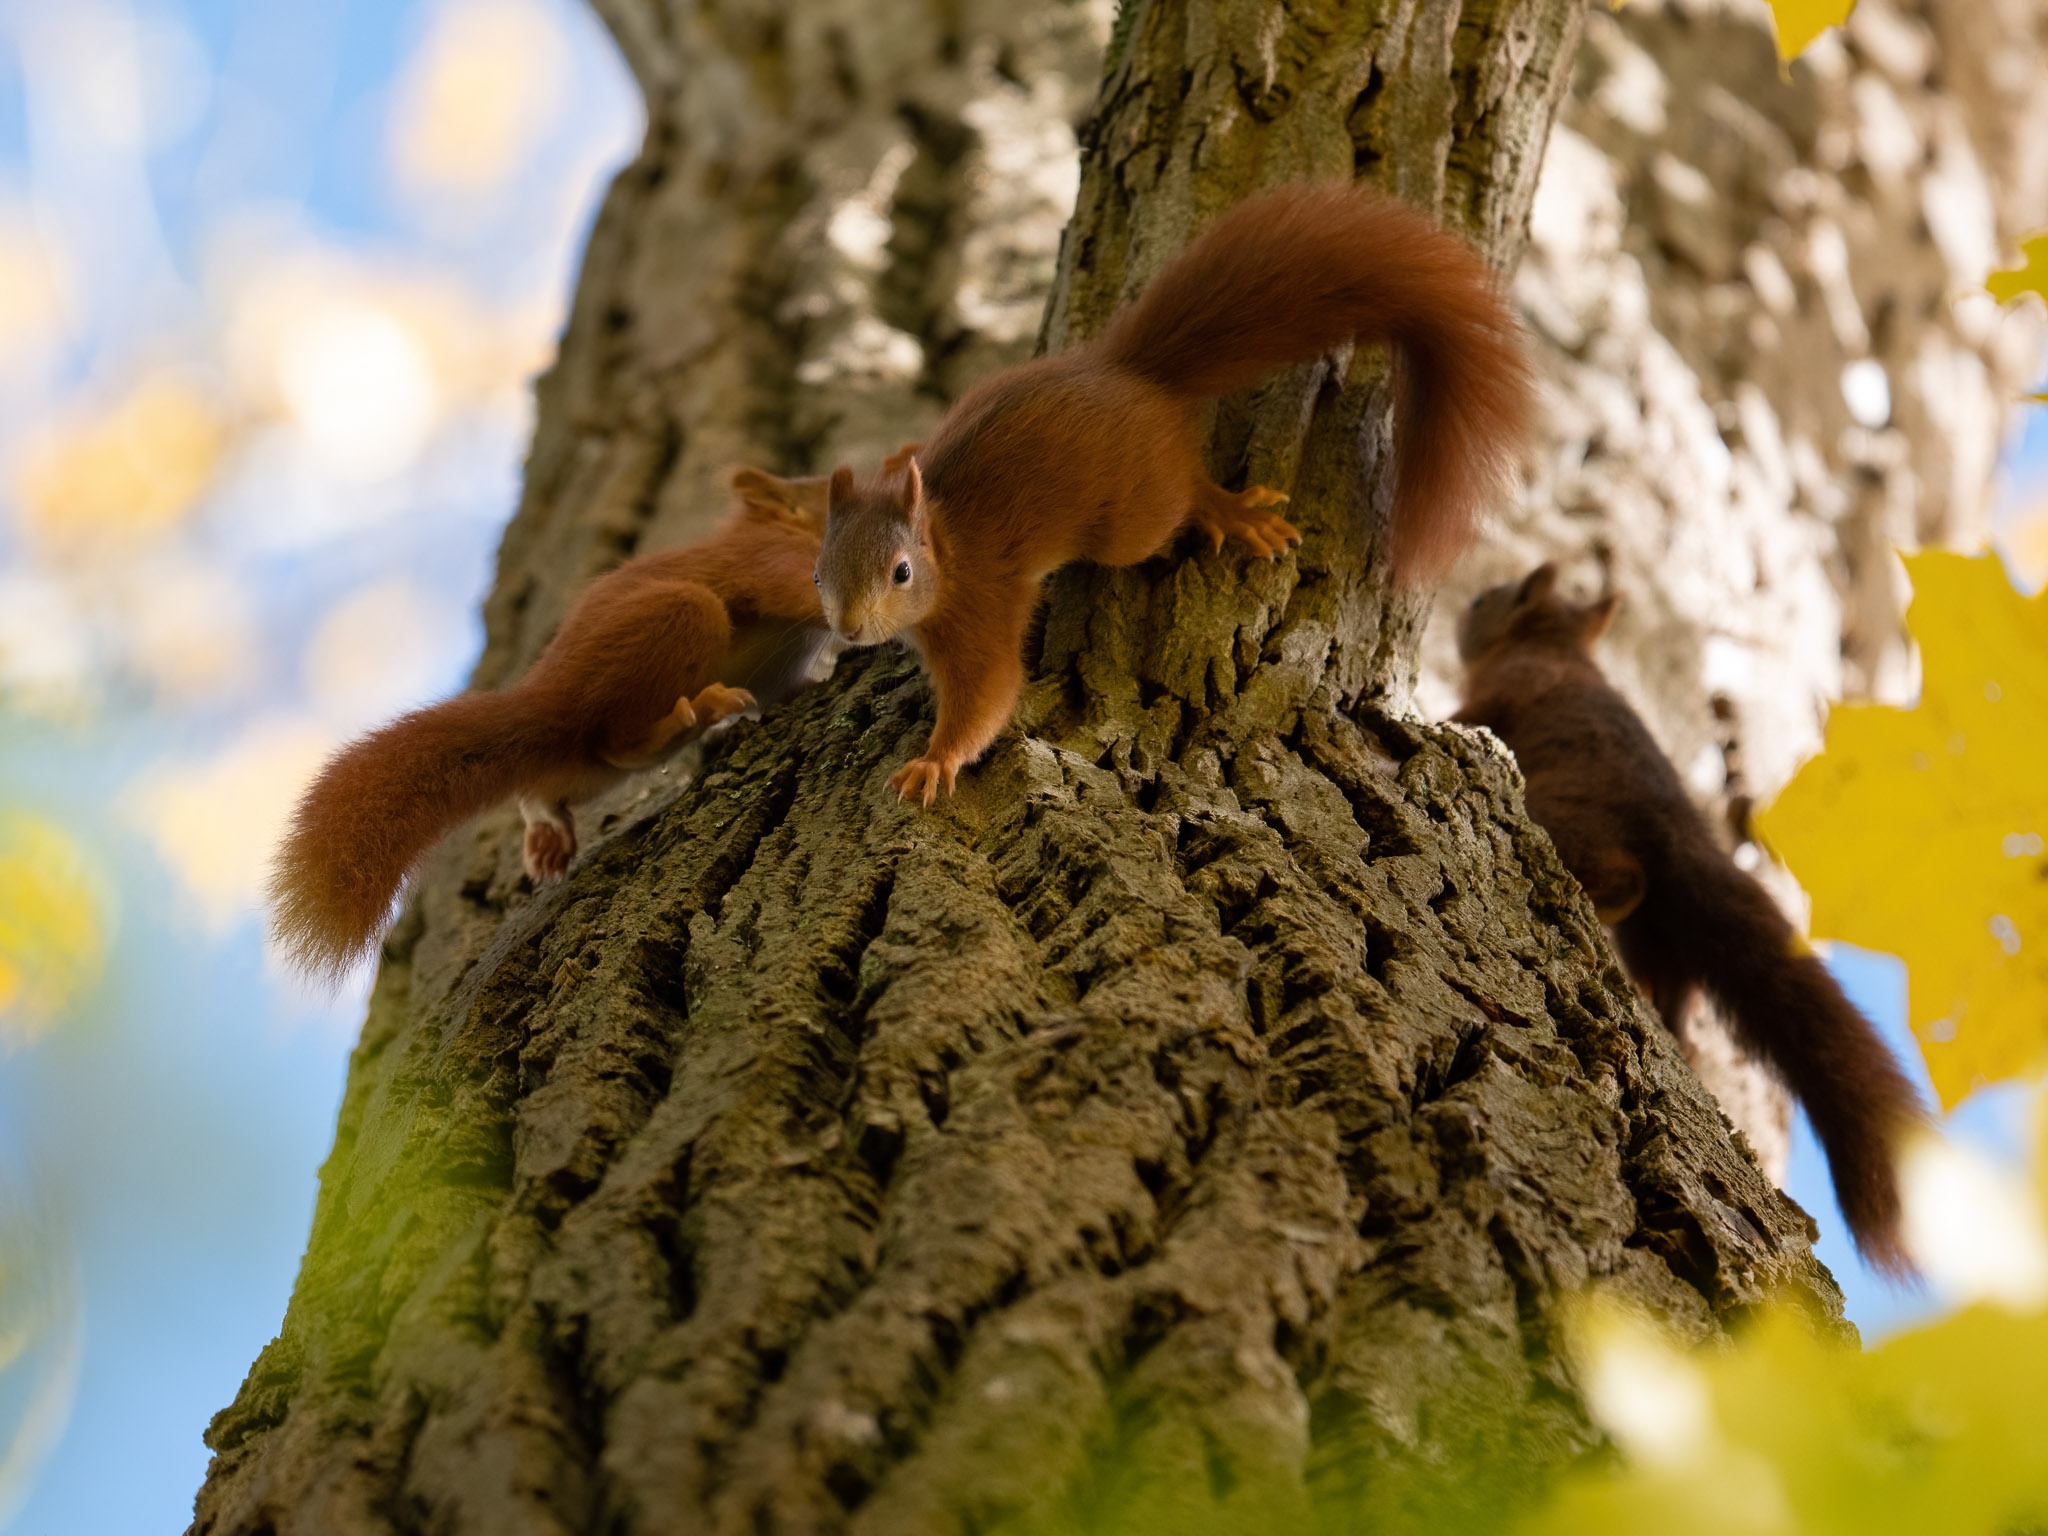 Animal Squirrel HD Wallpaper | Background Image